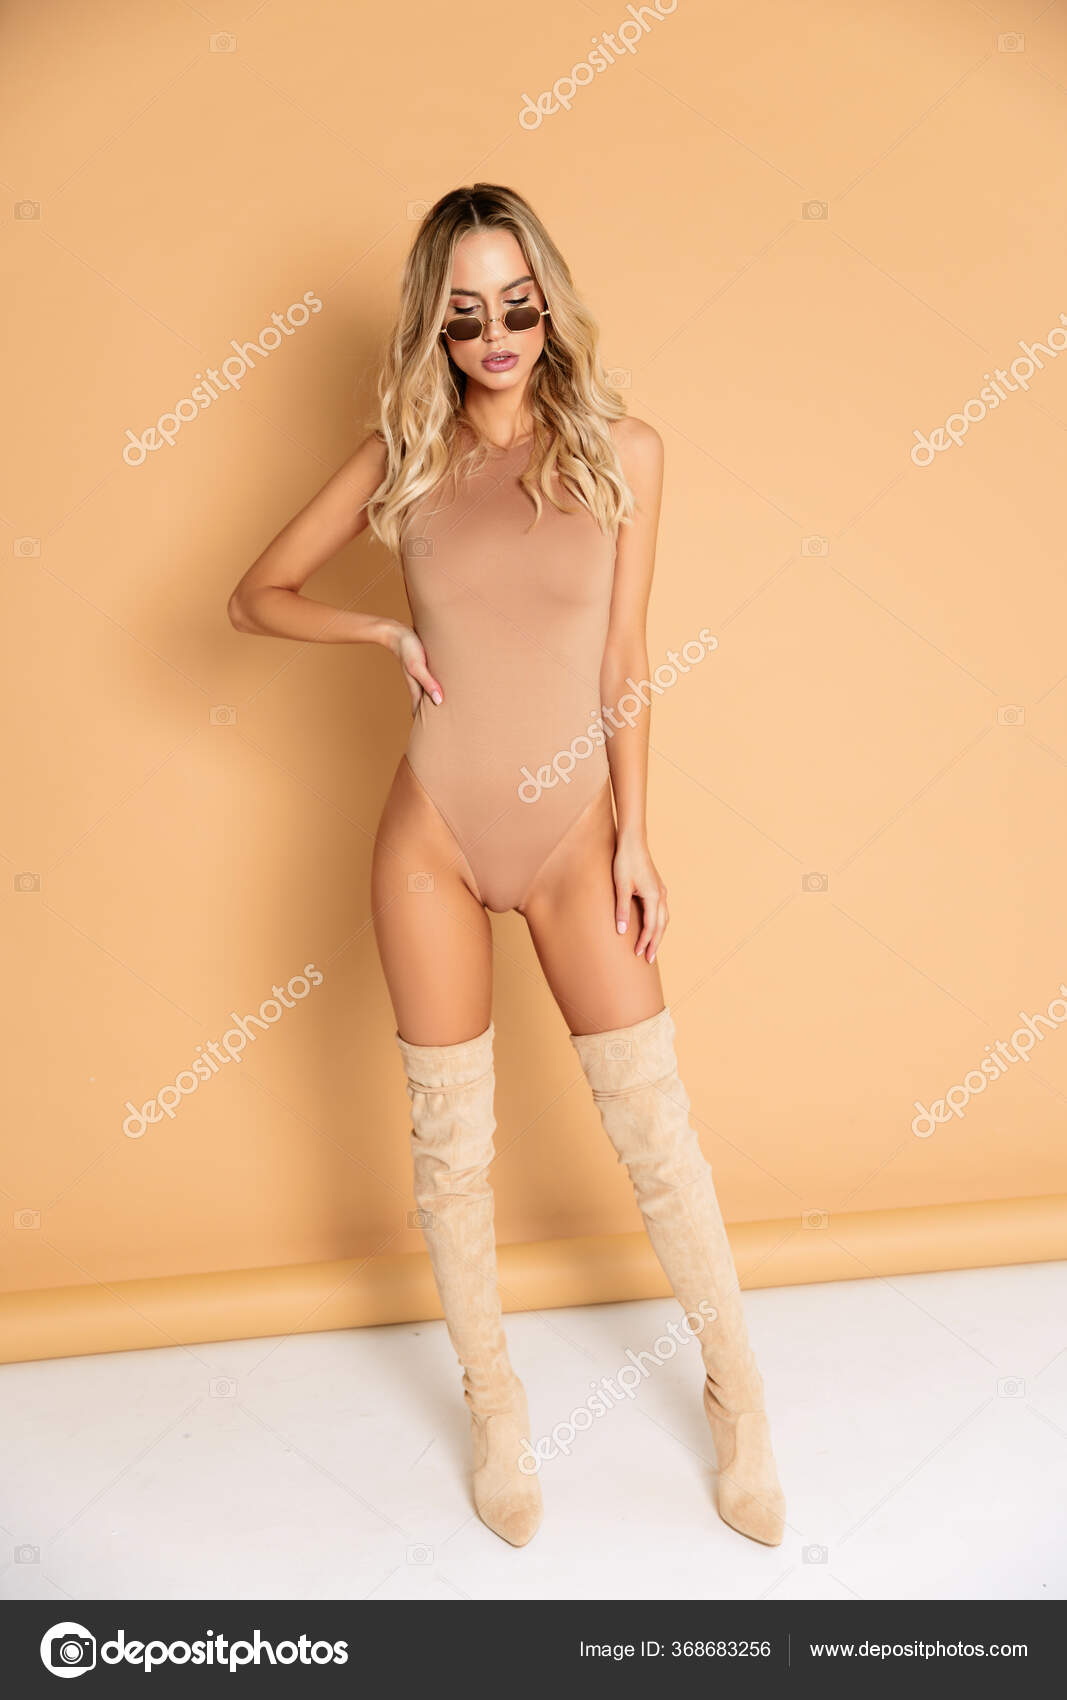 https://st3.depositphotos.com/2874113/36868/i/1600/depositphotos_368683256-stock-photo-sexy-blonde-model-perfect-skinny.jpg